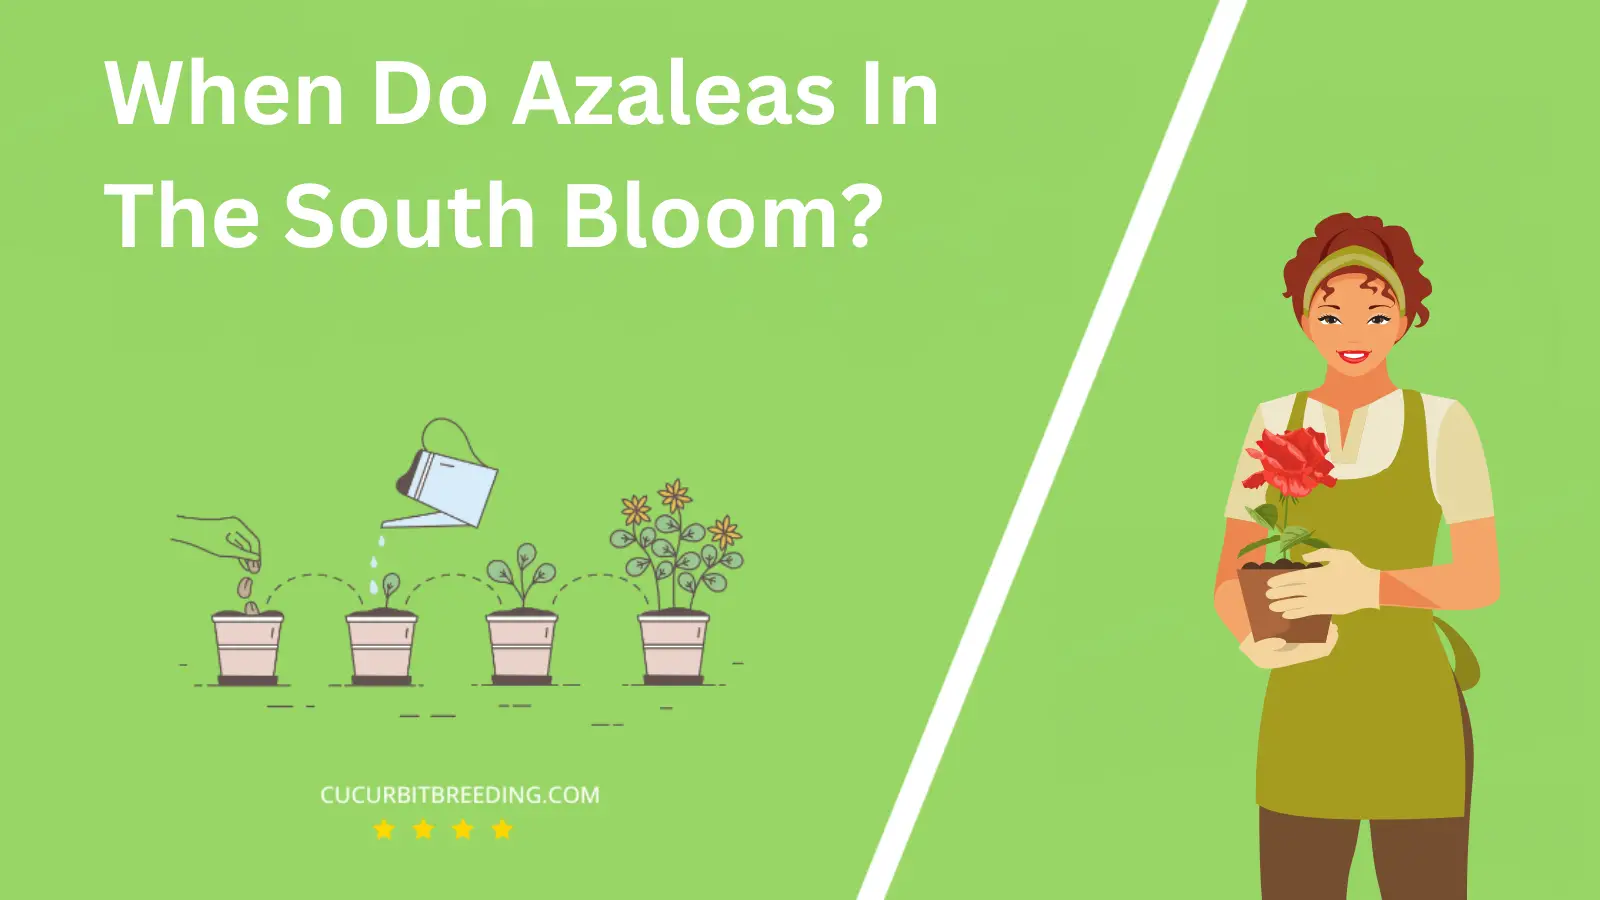 When Do Azaleas In The South Bloom?